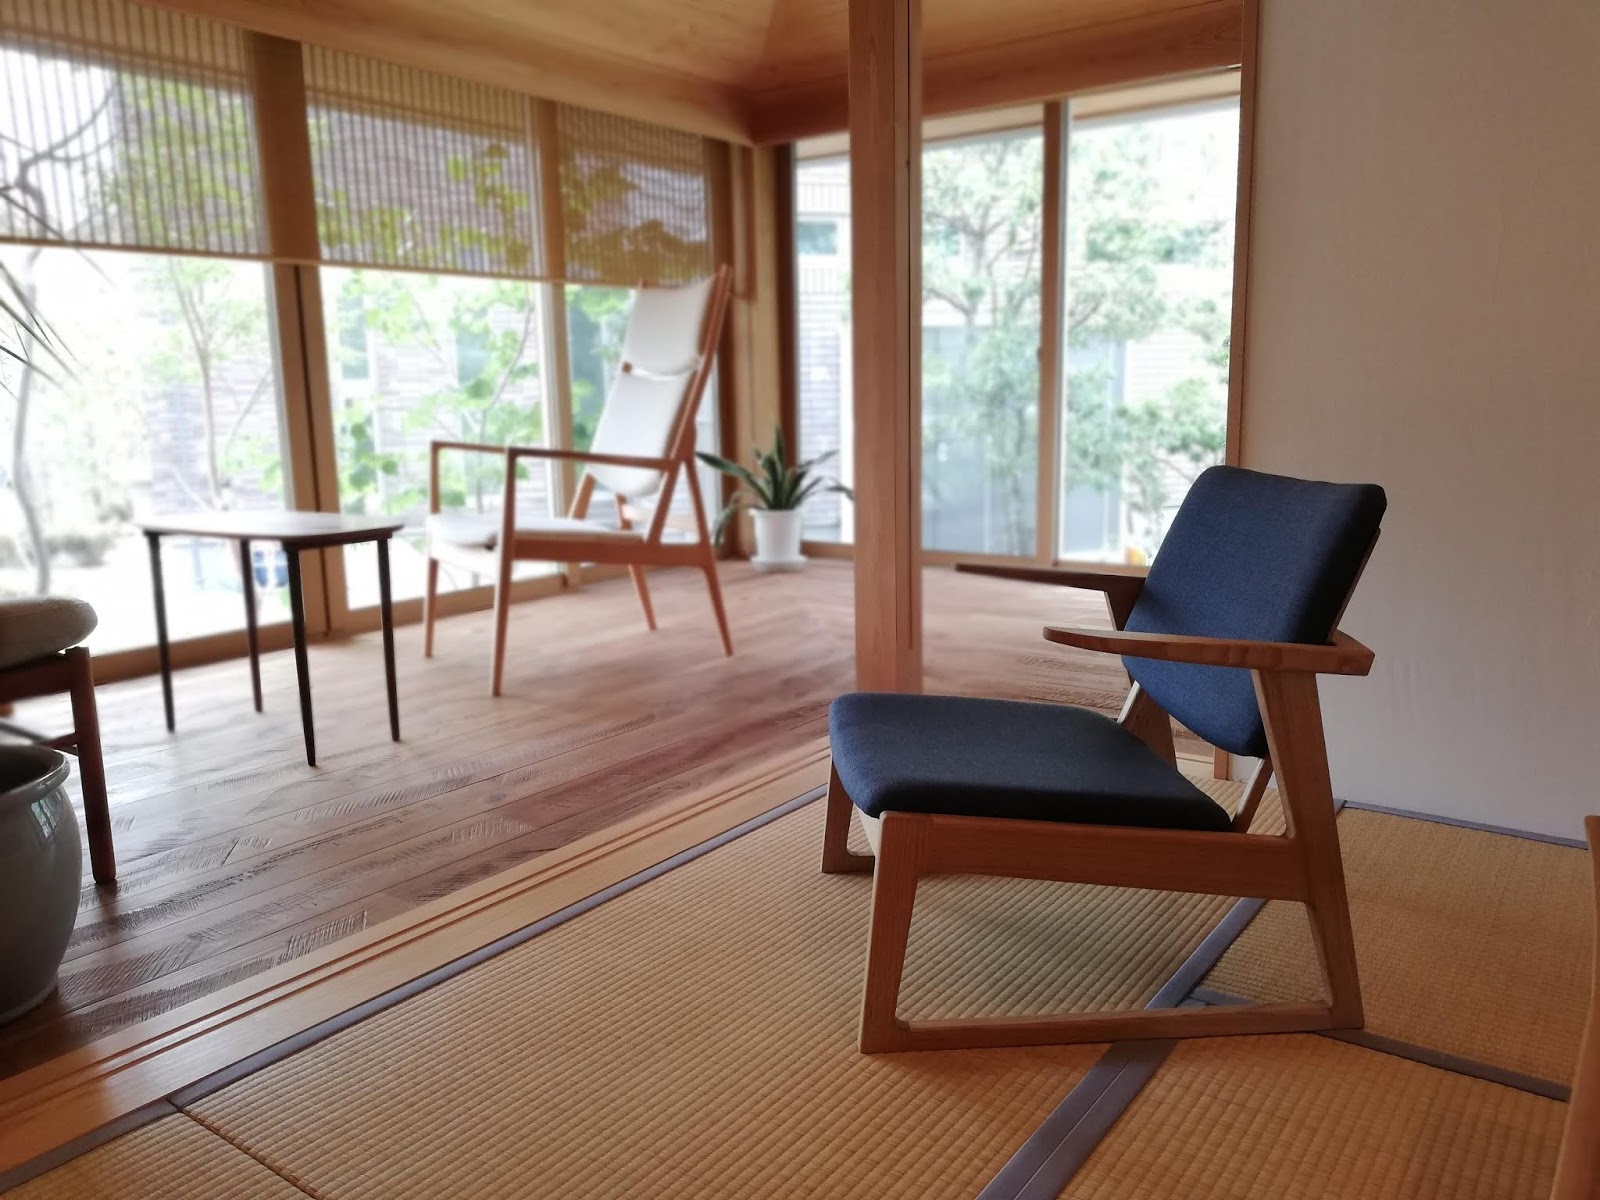 Chloros Furniture Blog: ”低座の椅子” Japanese-style easy chair